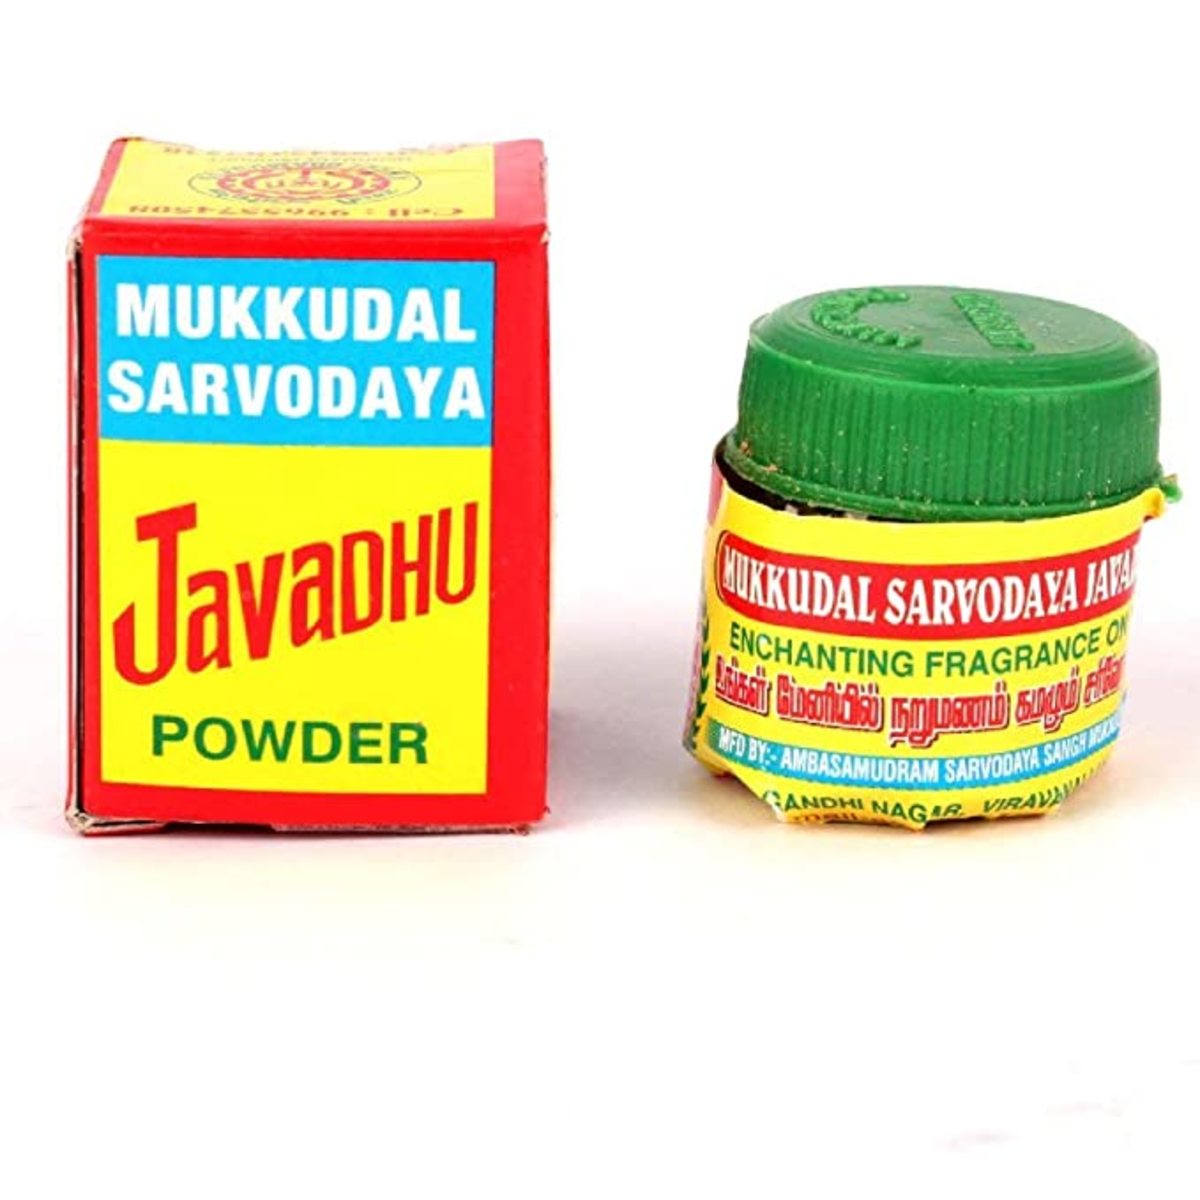 Javadhu Powder: A User Review of 100% Organic, Natural Perfume